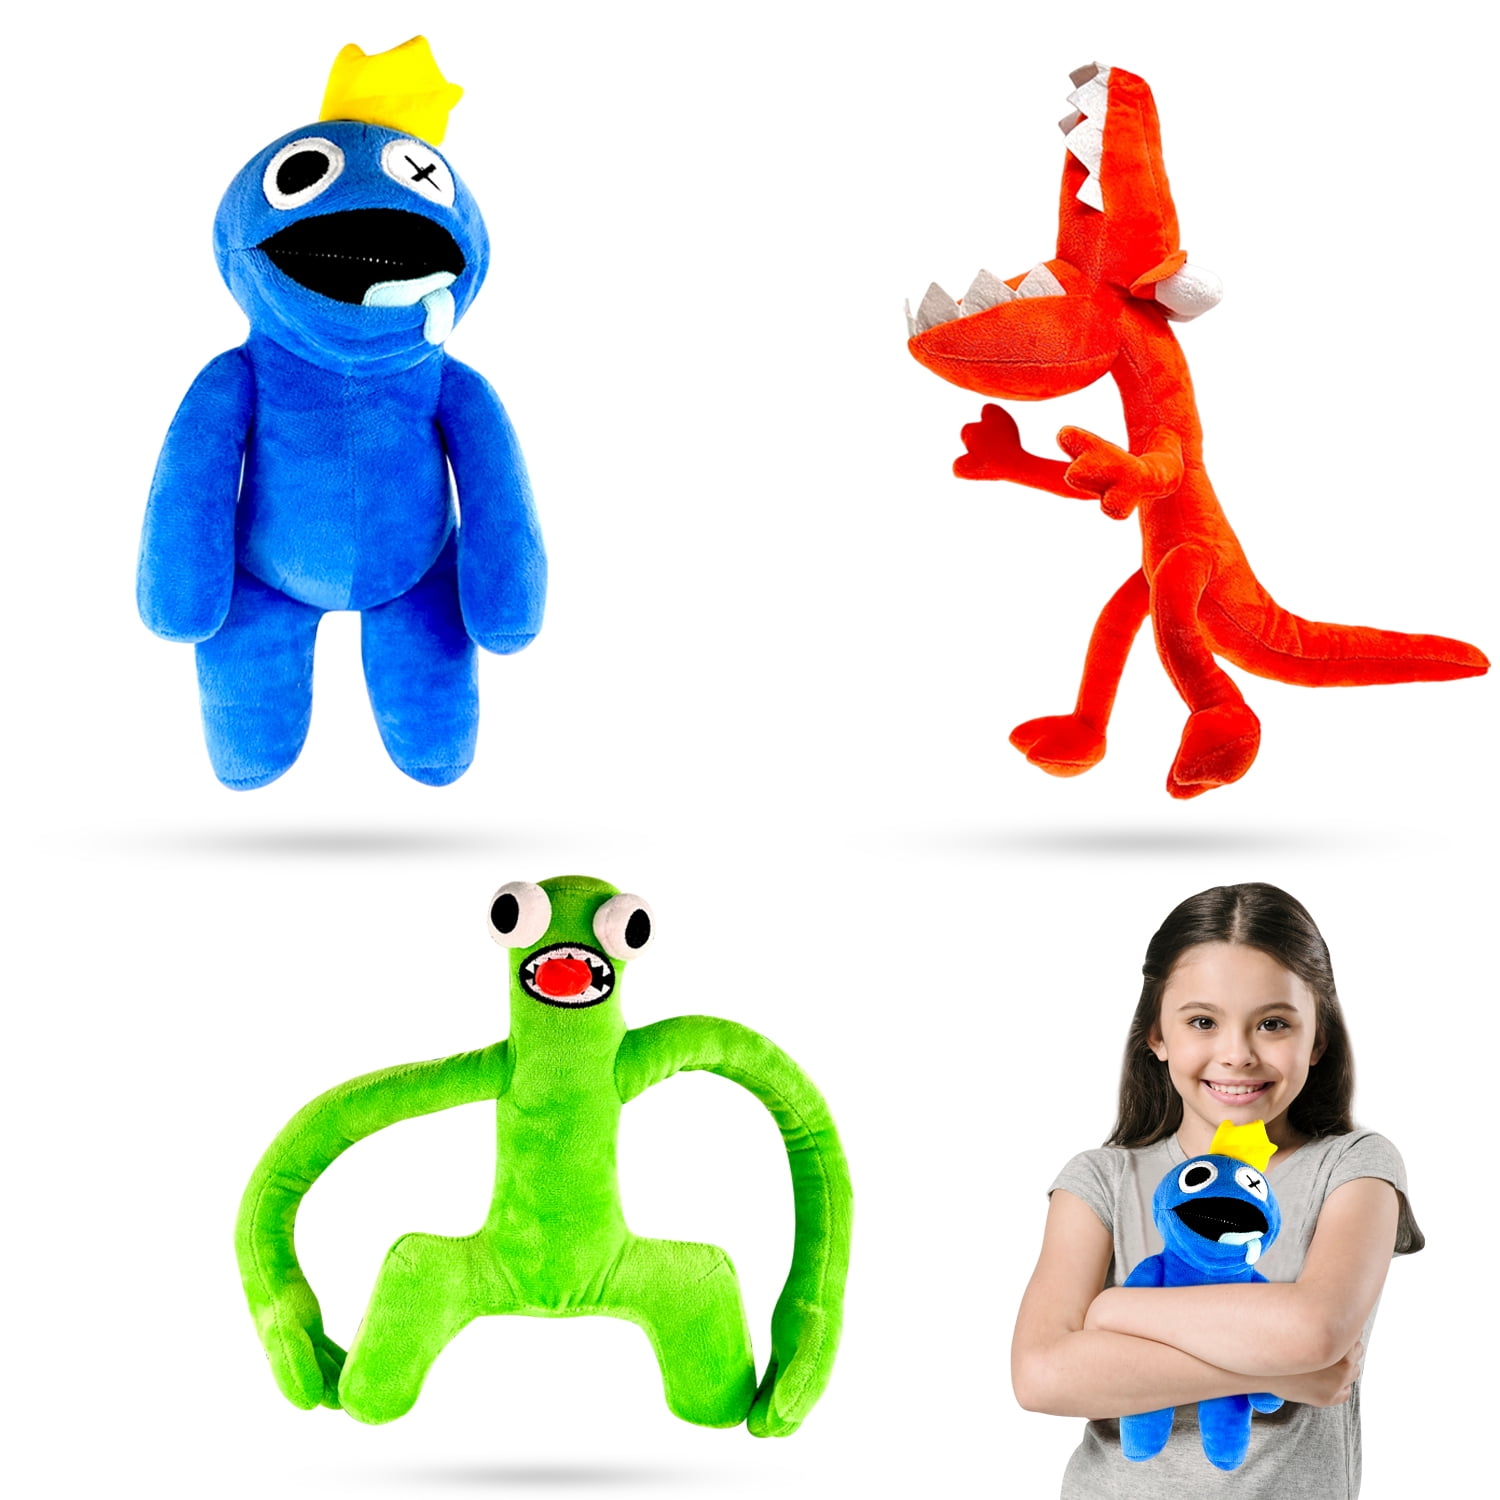 Brand New Rainbow Friends Brown Plush Toy Soft Stuffed Animal Monsters Doors